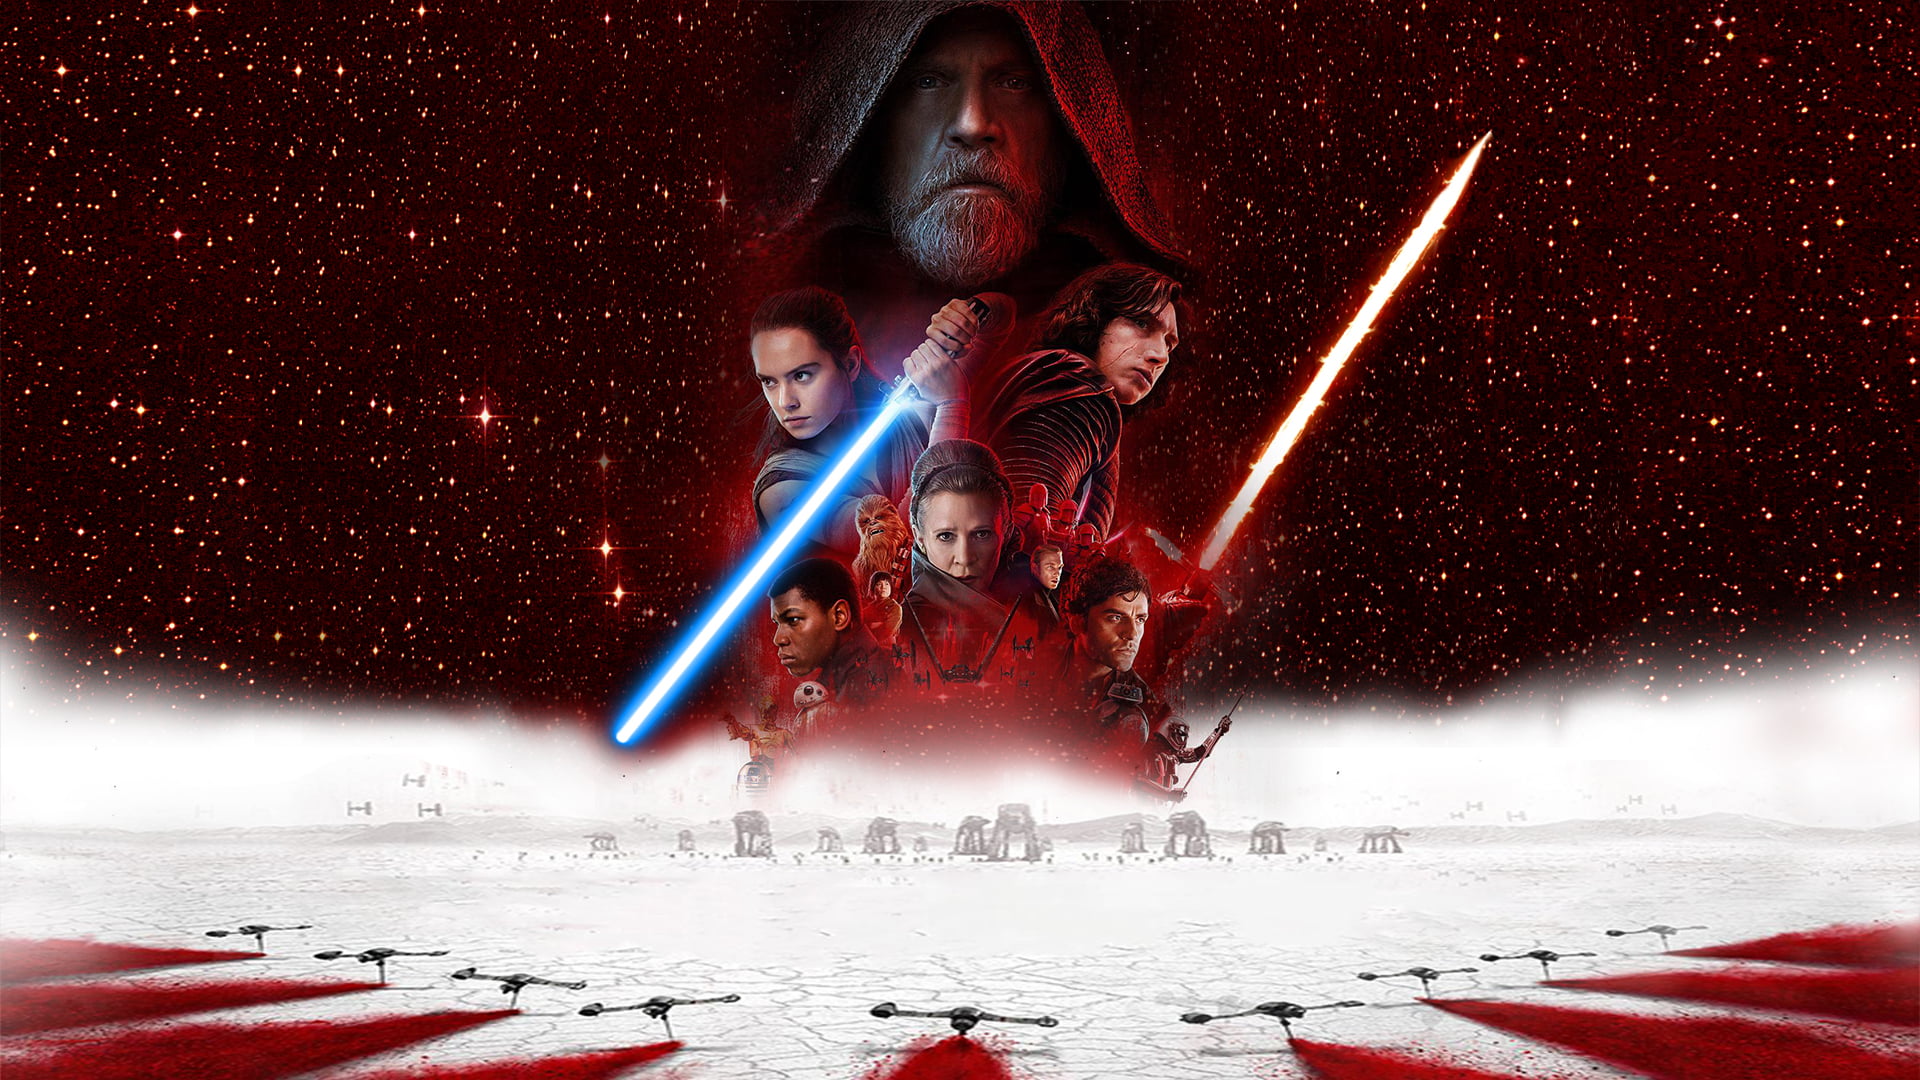 Star Wars digital wallpaper, Star Wars: The Last Jedi, Rey (from Star Wars), Luke Skywalker, Princess Leia